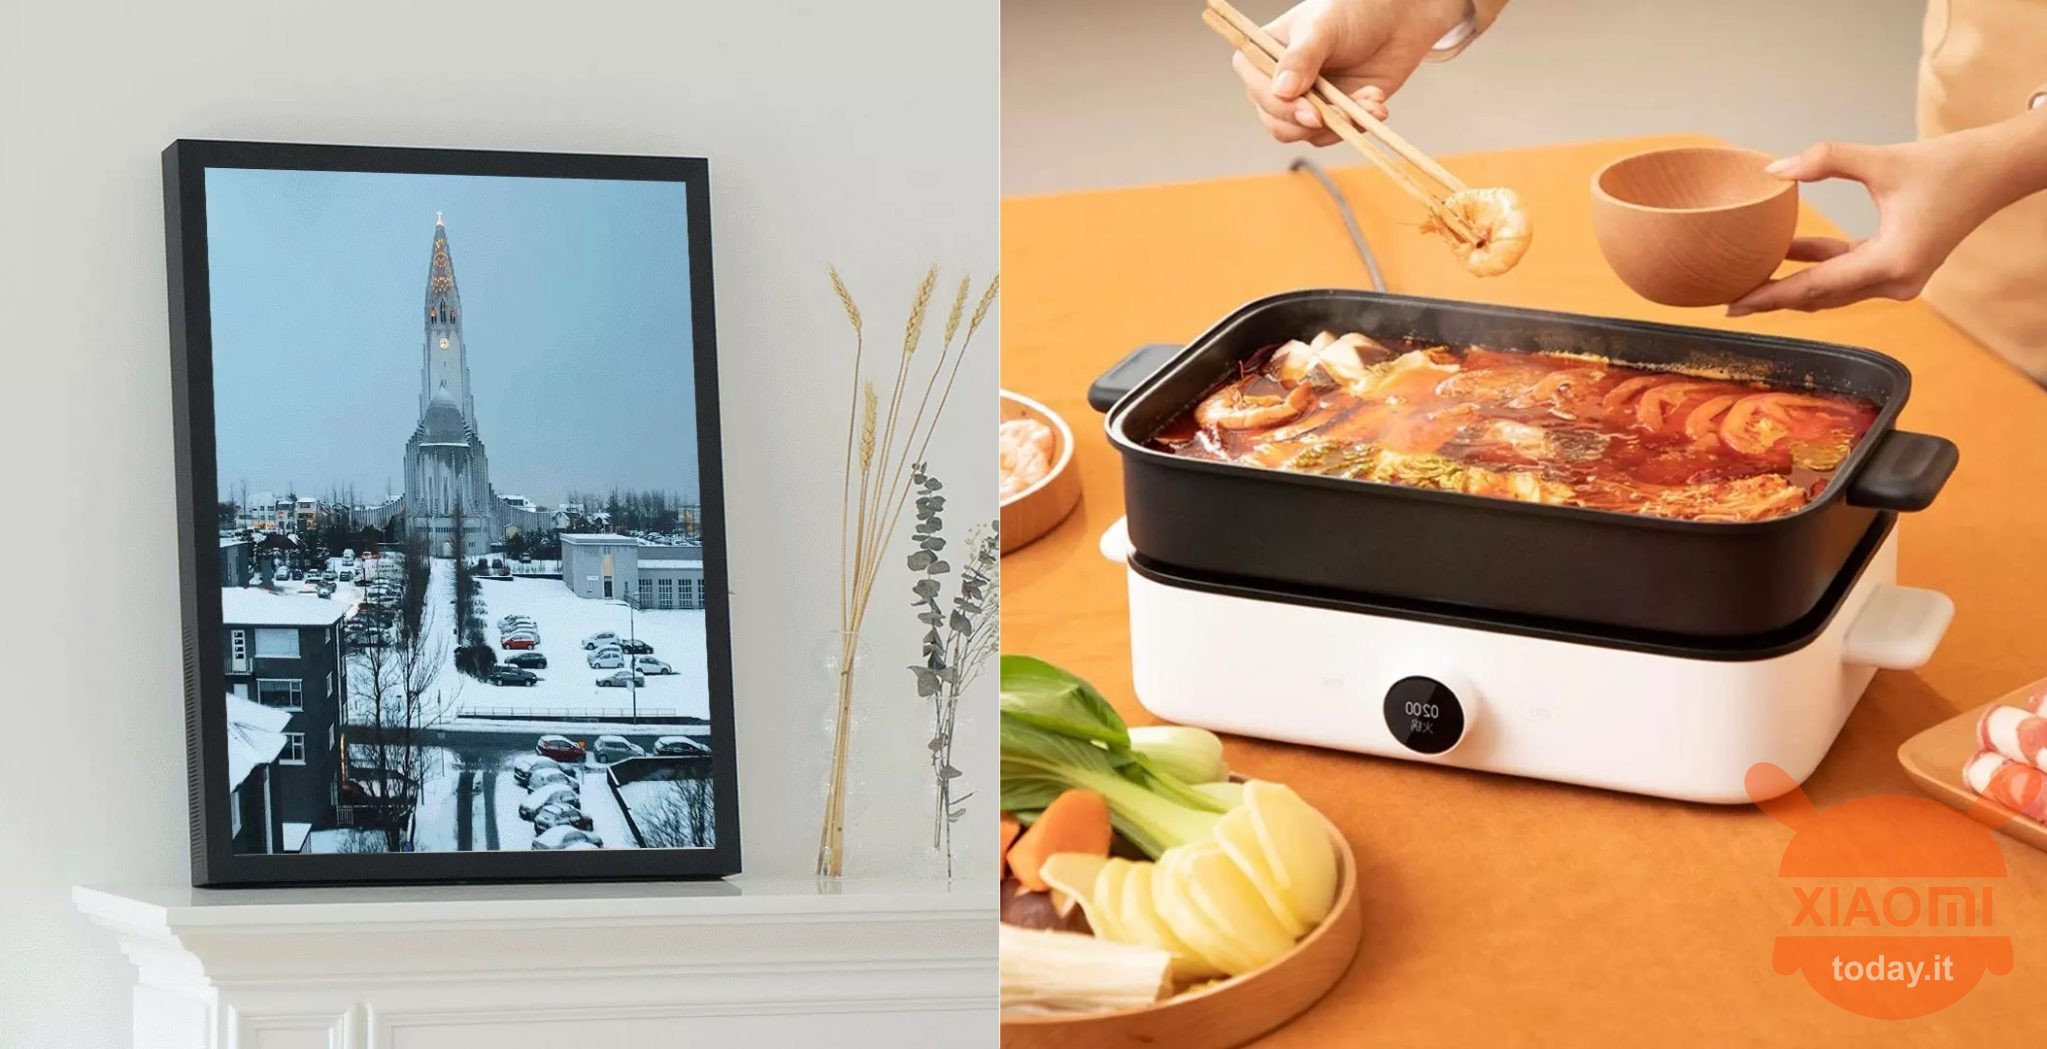 MORROR ART Mural Lyrics Speaker T1 Xiaomi Mijia Smart IH Multi-function Cooking Pot